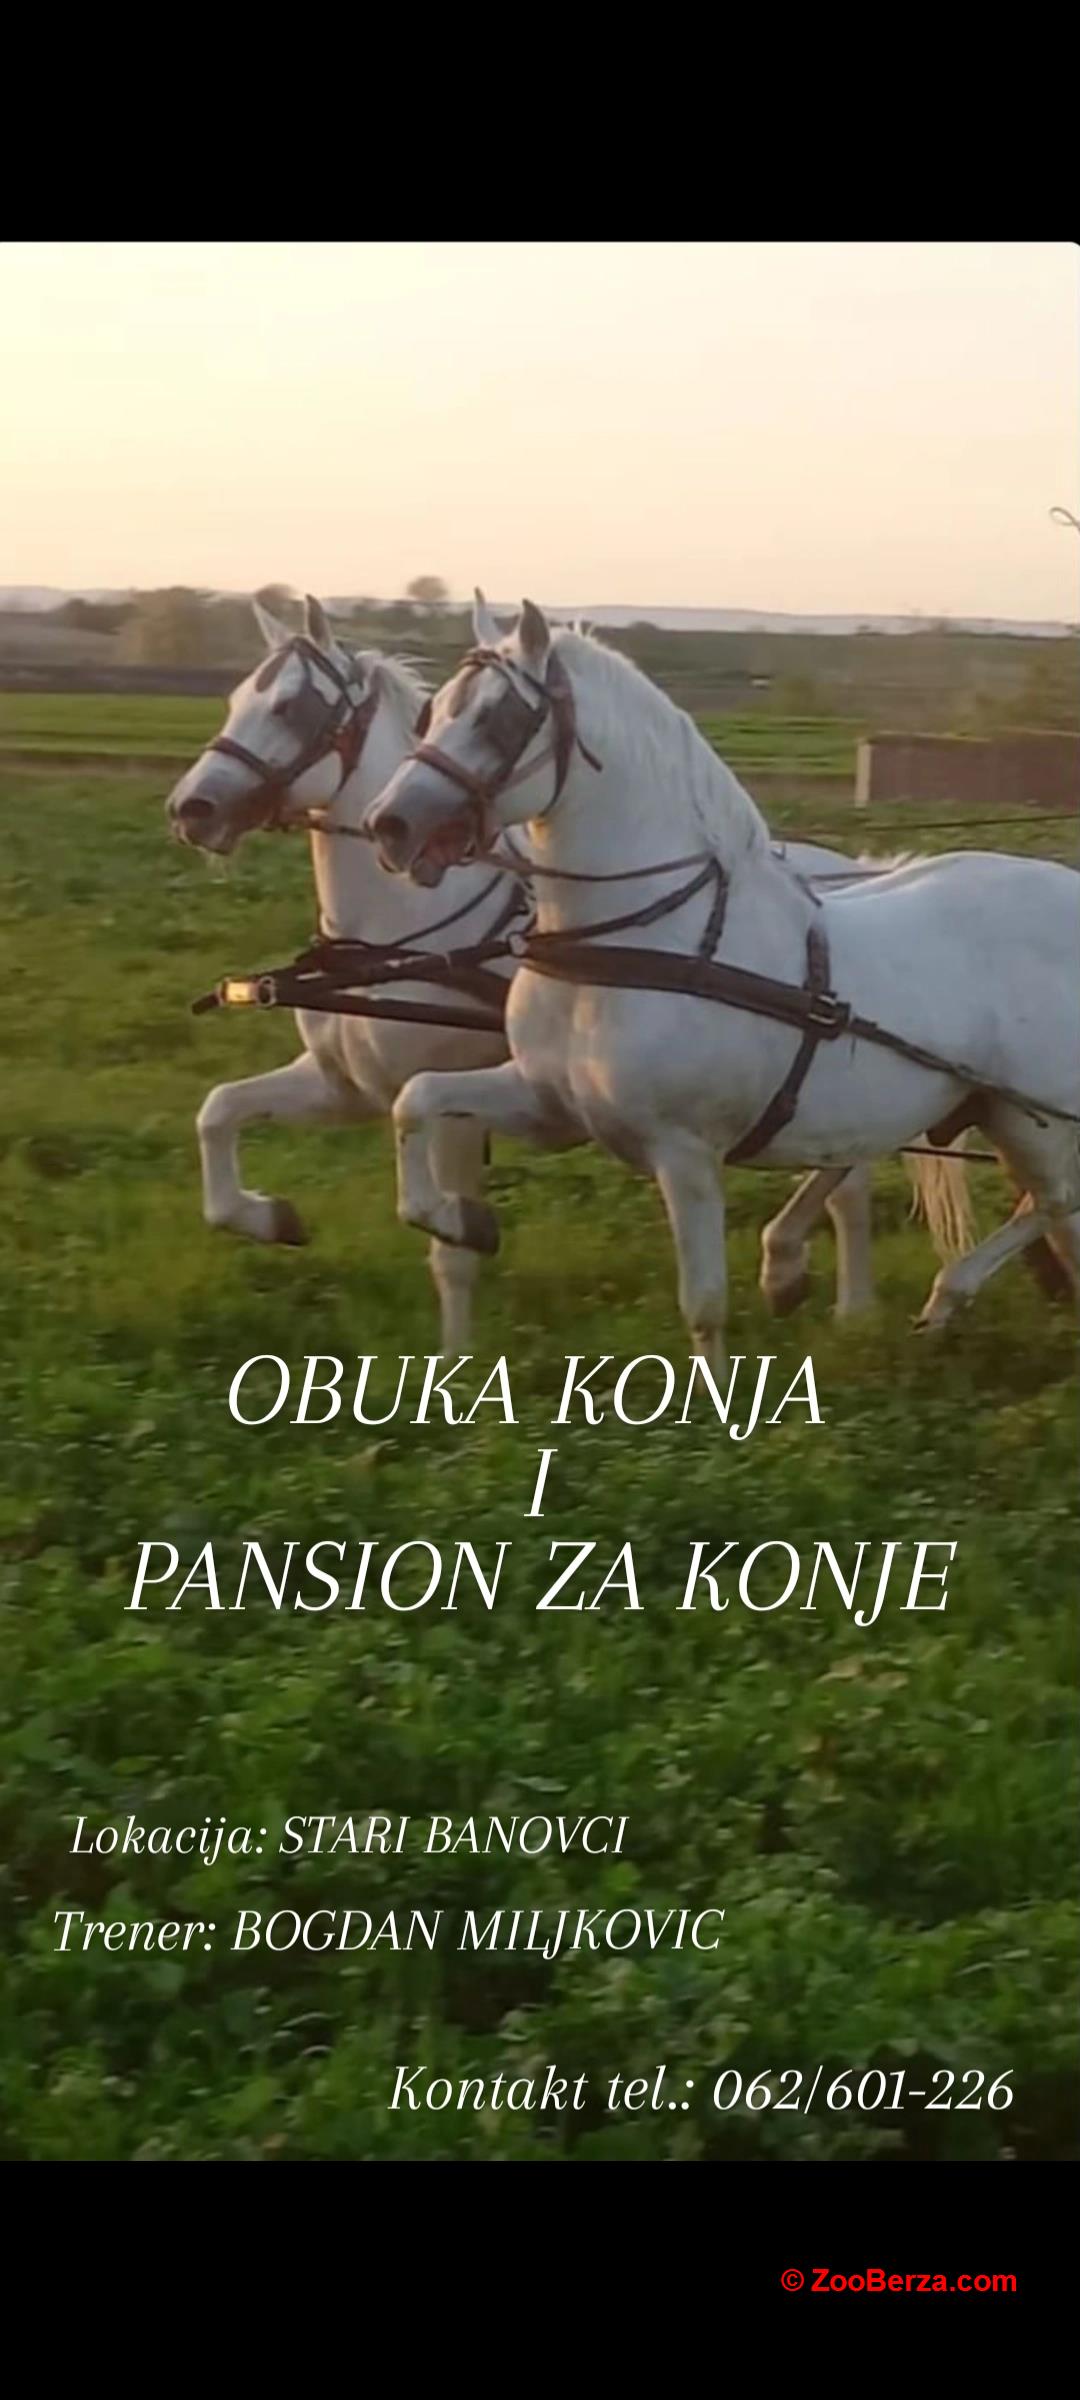 Obuka i pansion za konje